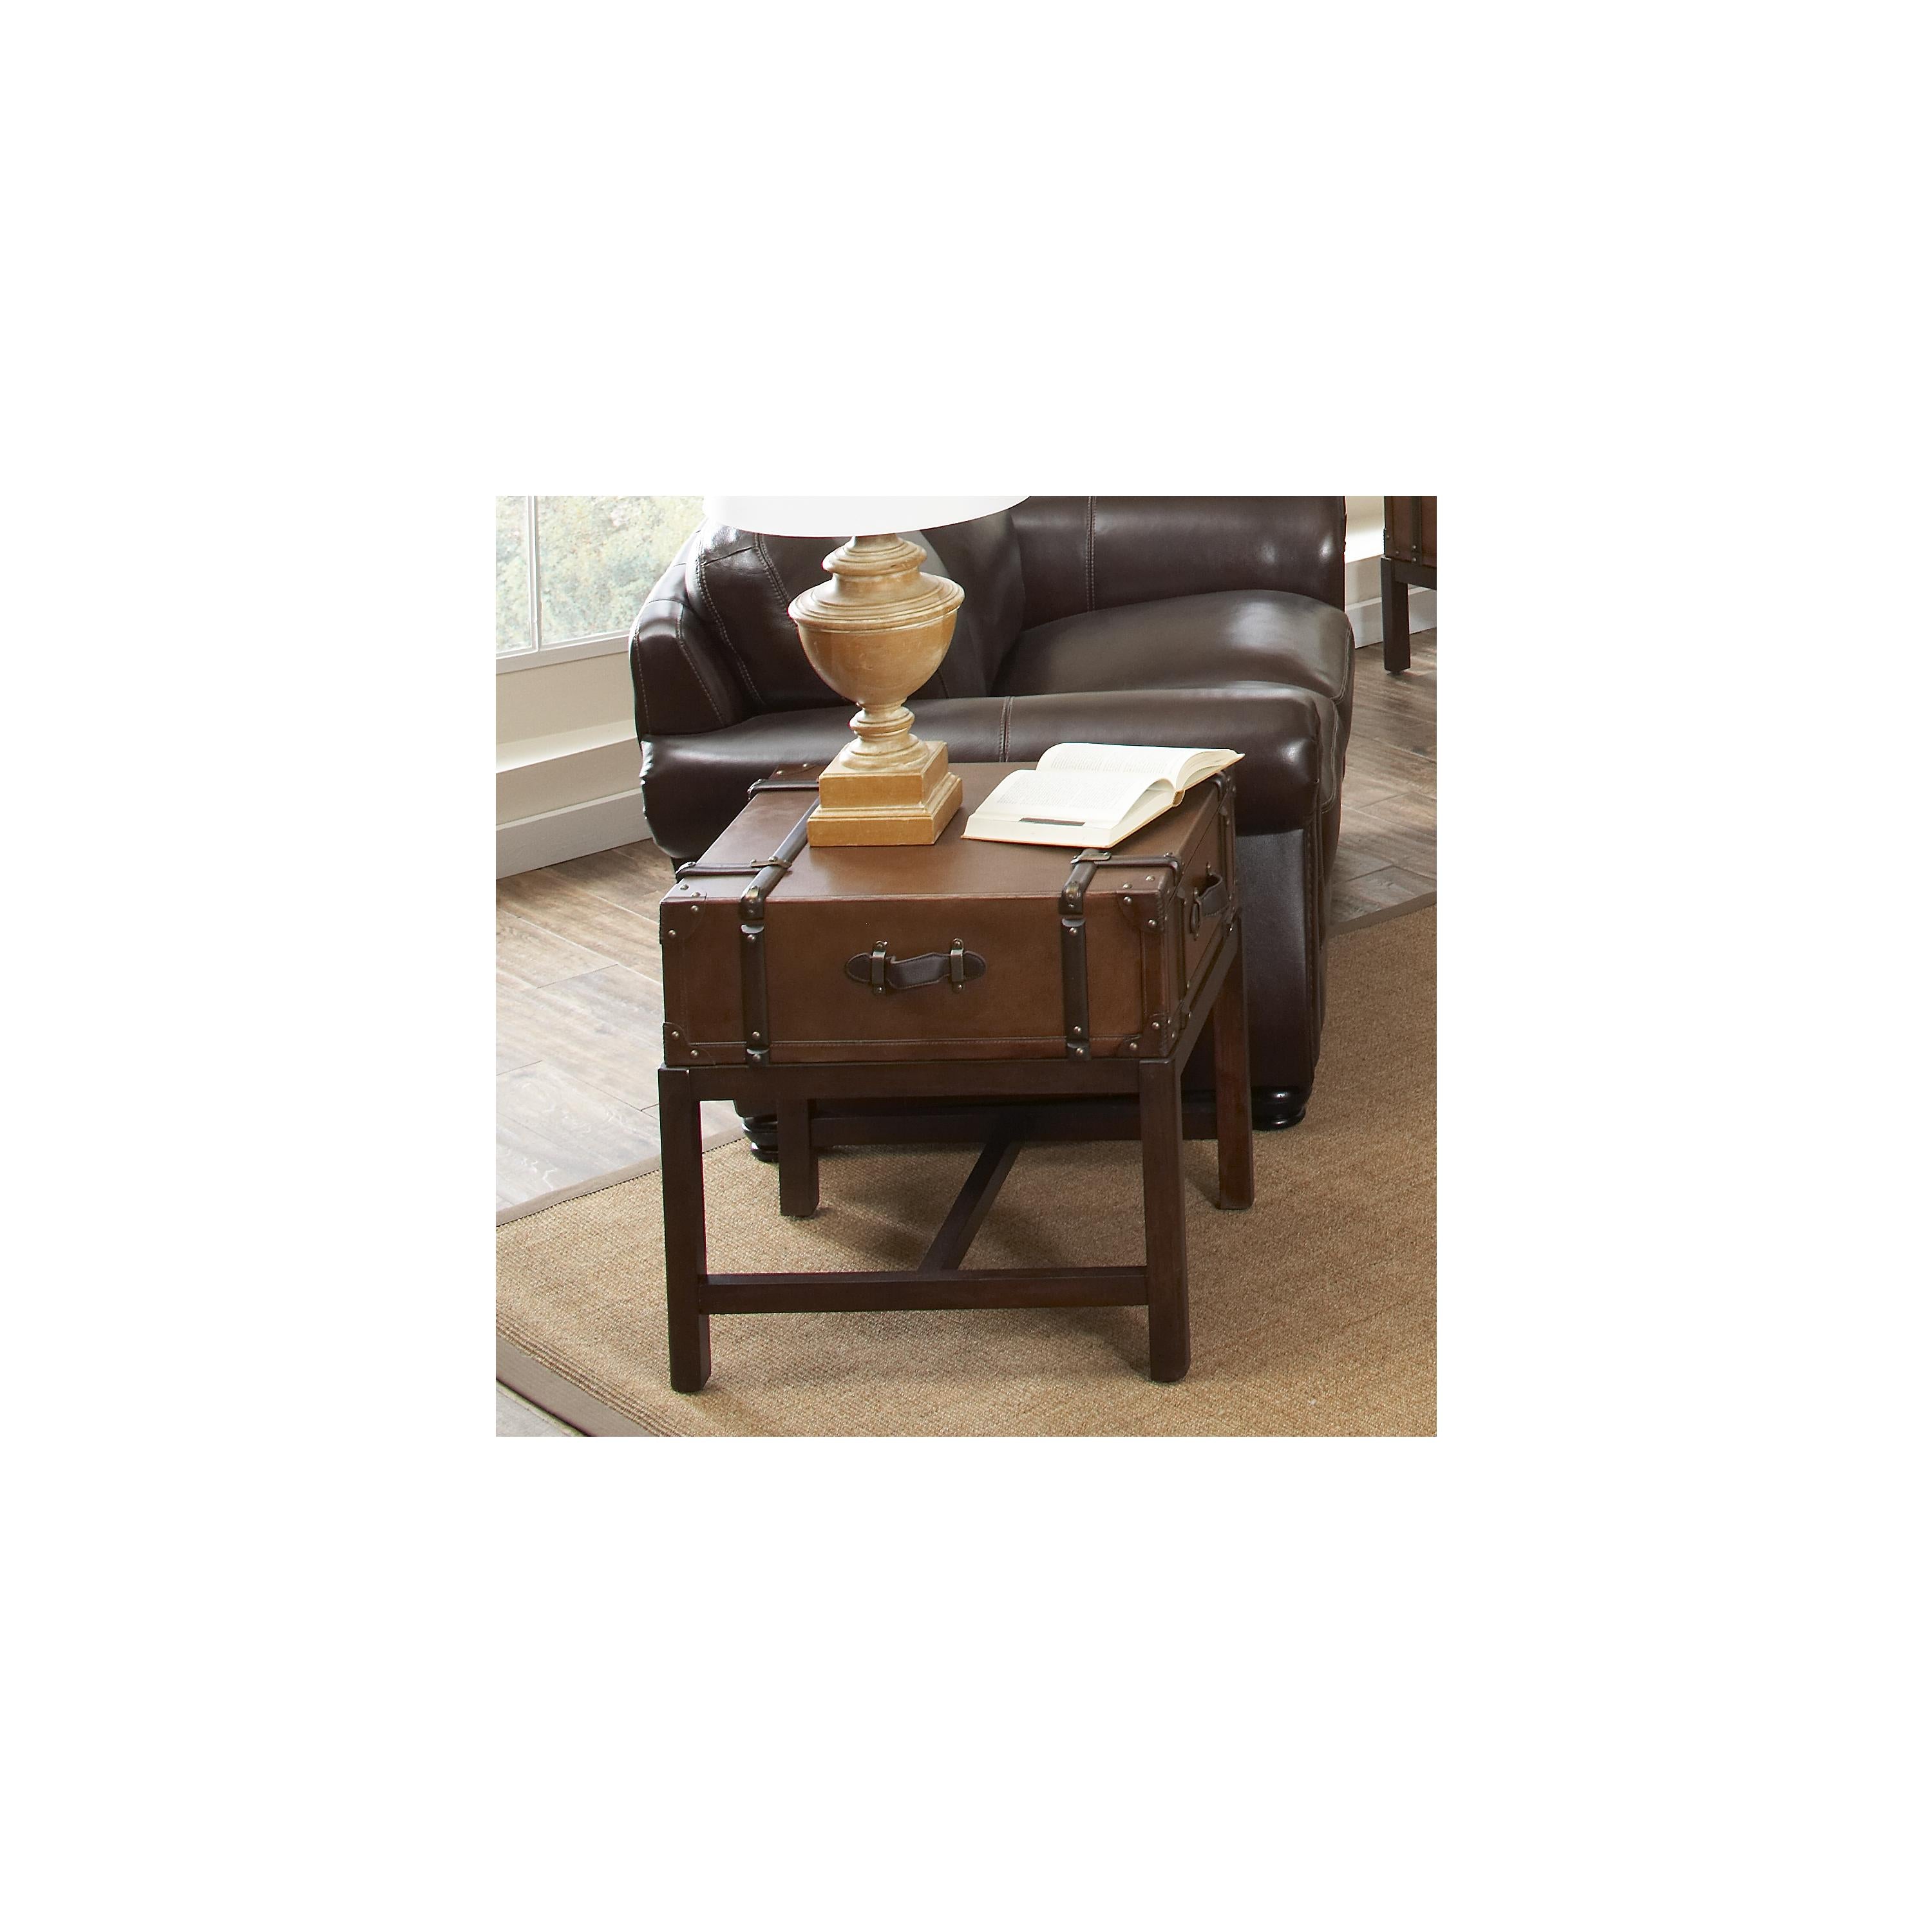 Riverside - 38703 - Steamer Trunk Lift Top Coffee Table-38703